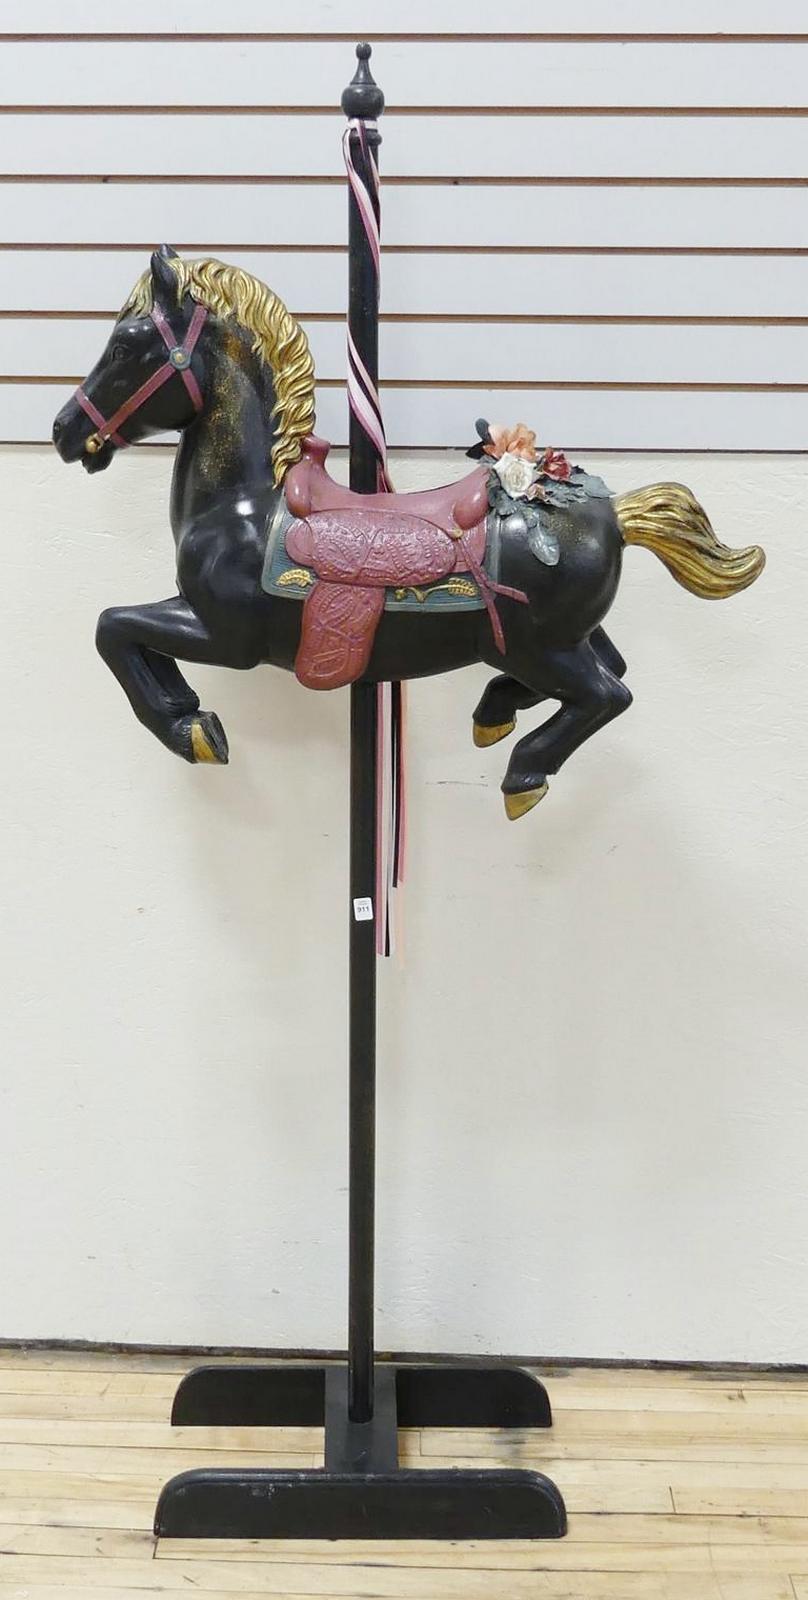 DECORATIVE "CAROUSEL" HORSE